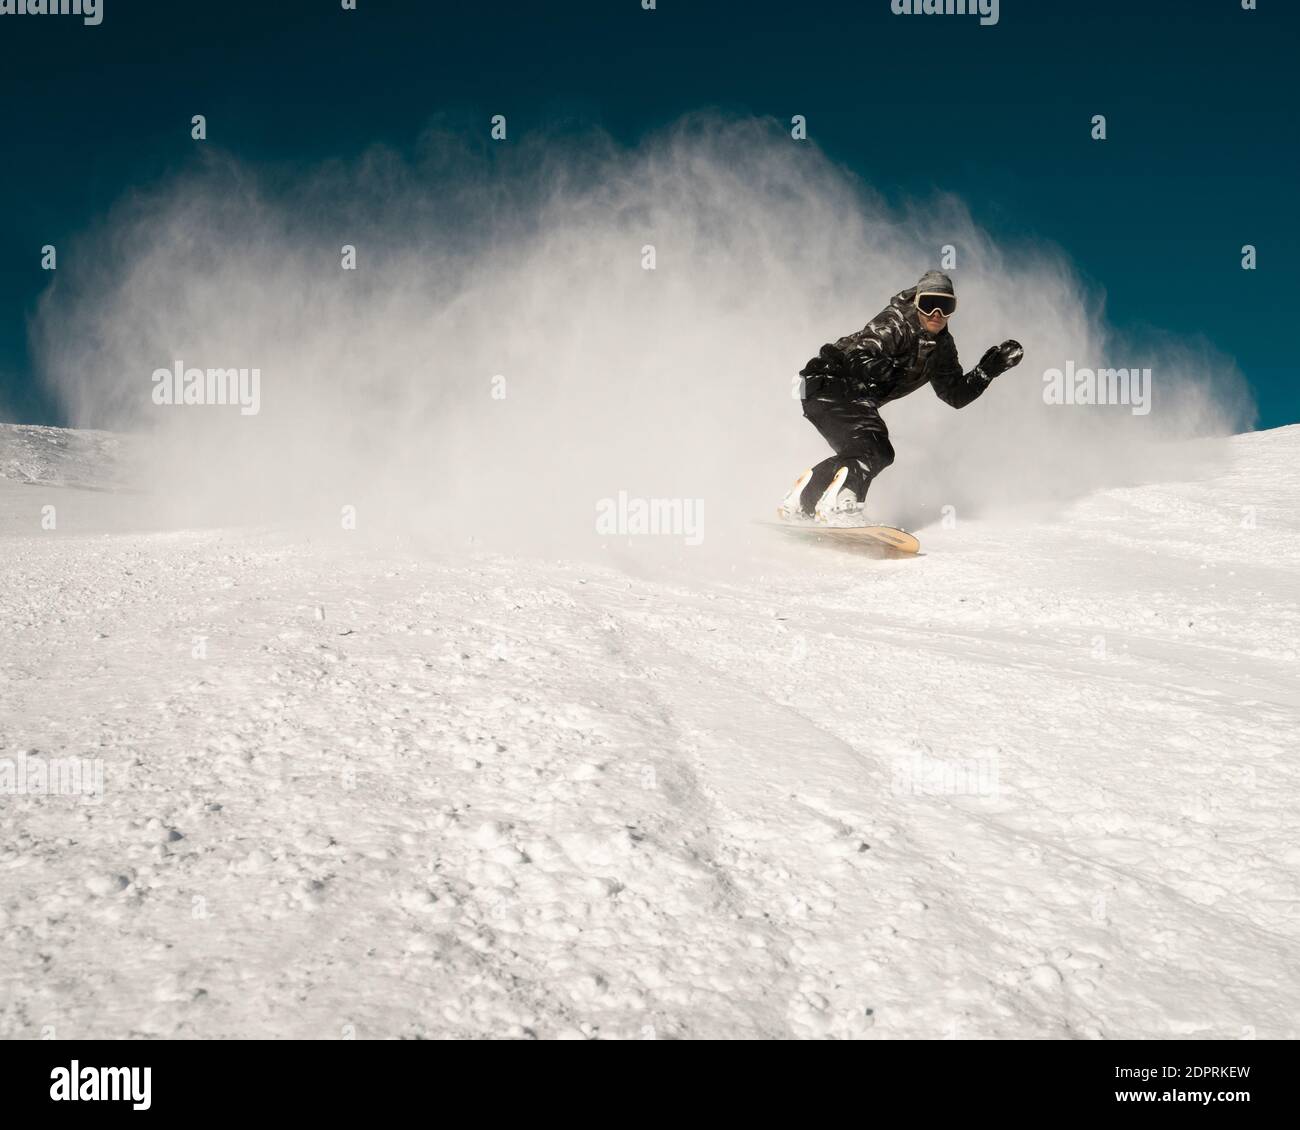 Man Snowboarding On Snowy Land Against Clear Sky Stock Photo - Alamy